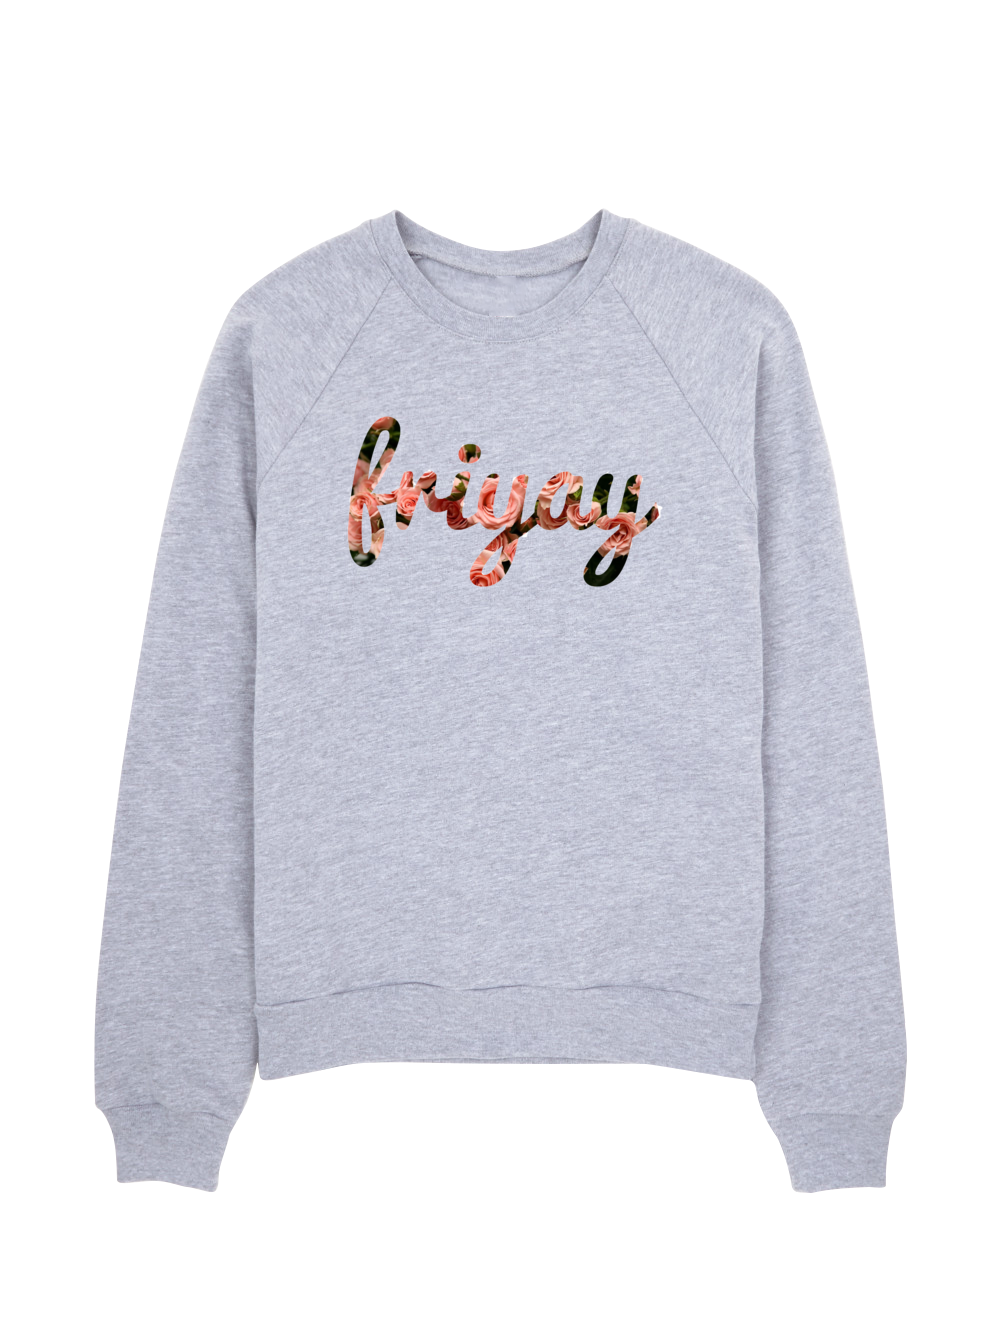 Friyay Sweater | Women's Heather Grey Sweatshirt, Pullover - little cutees